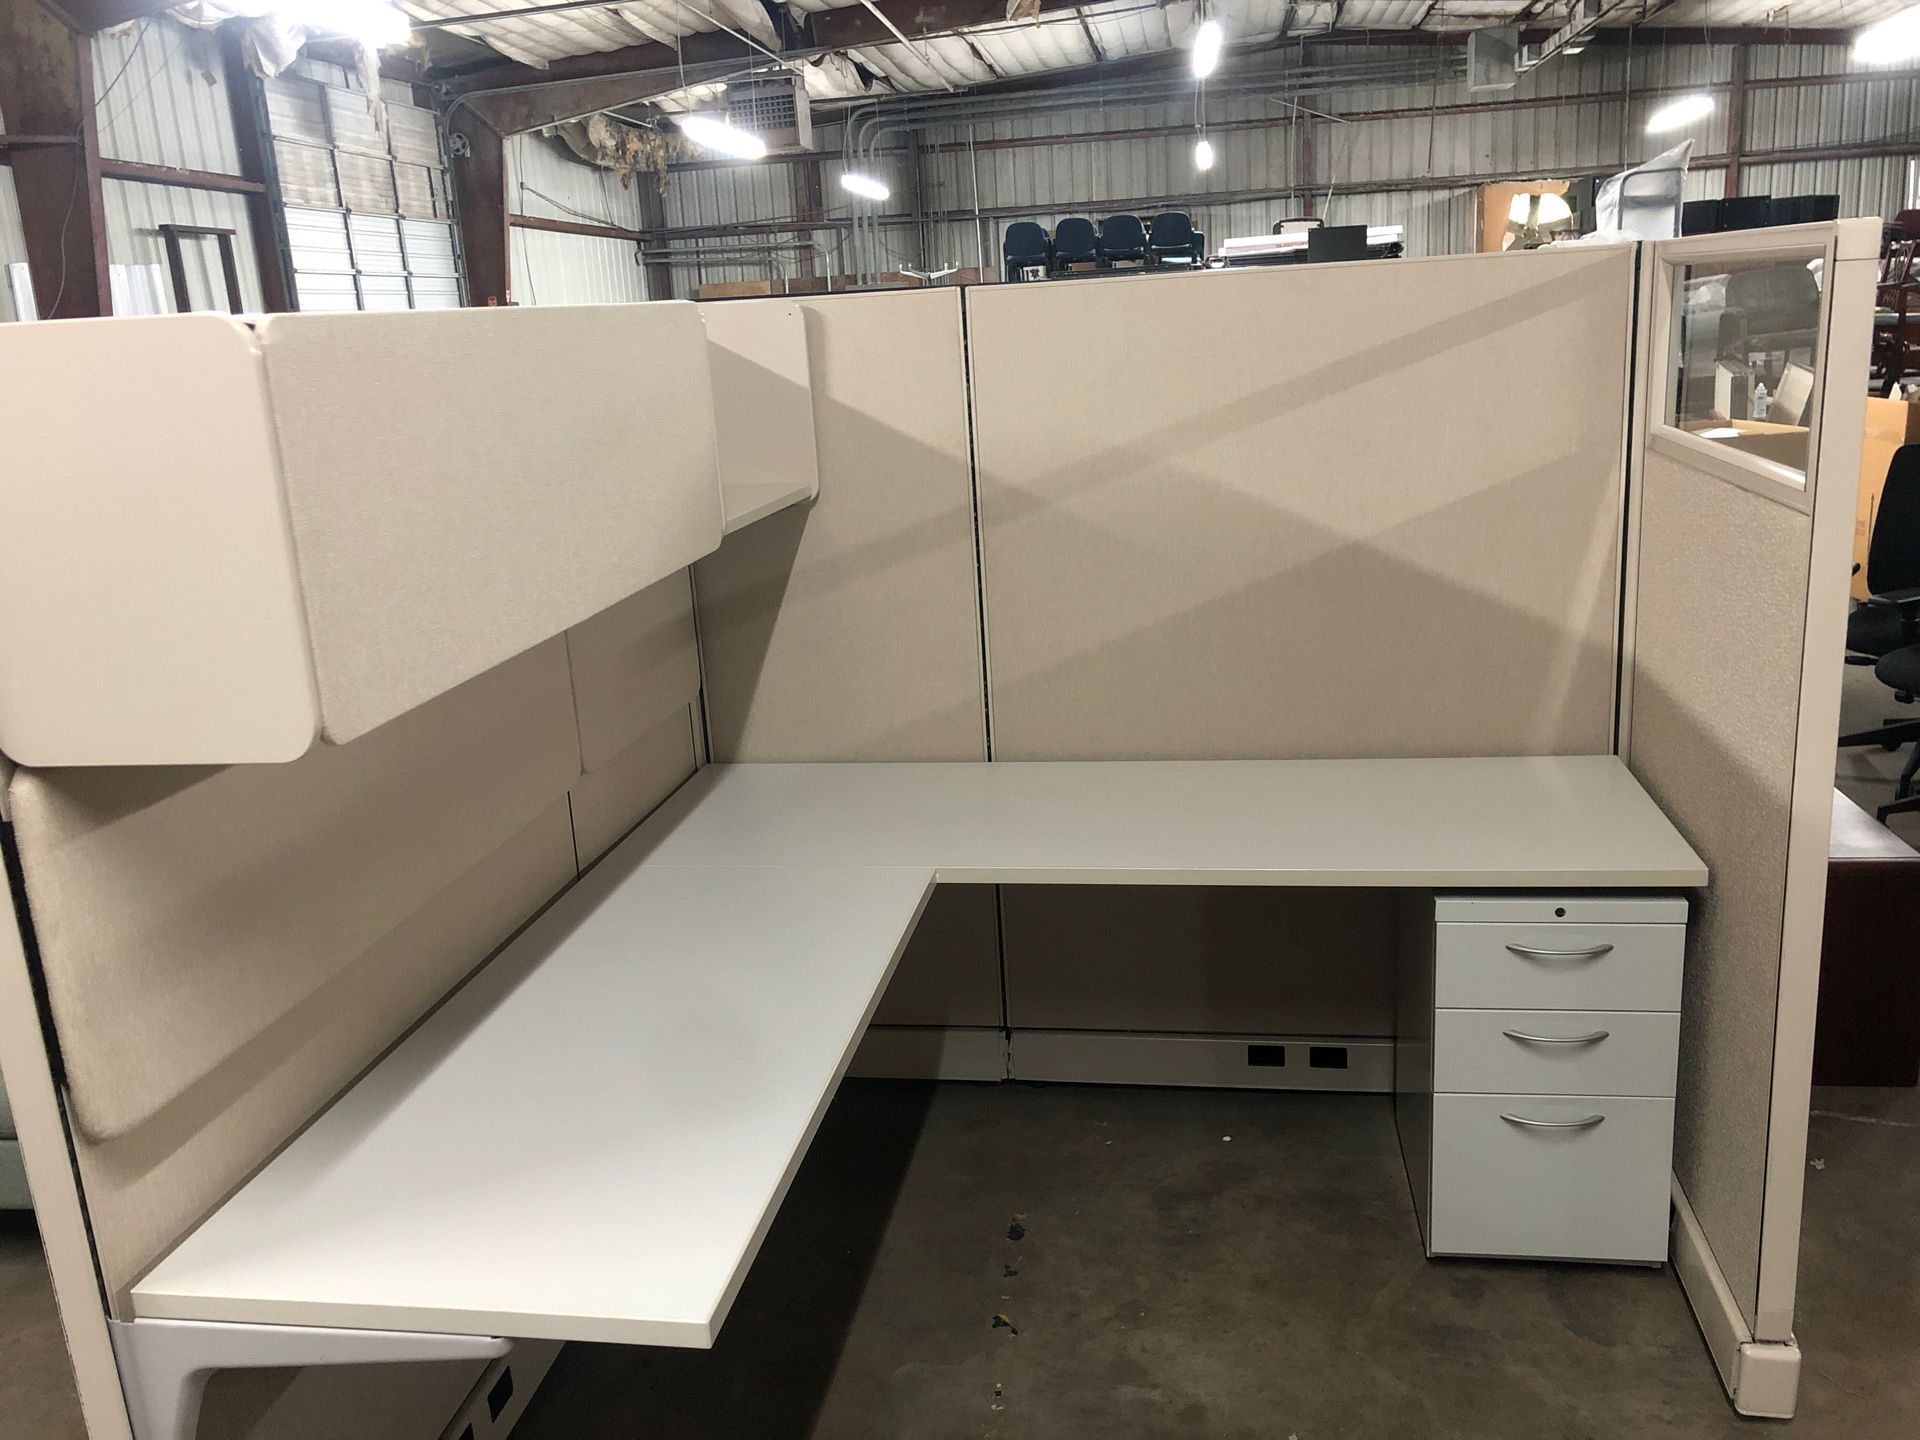 Herman Miller office cubicles 6’x6